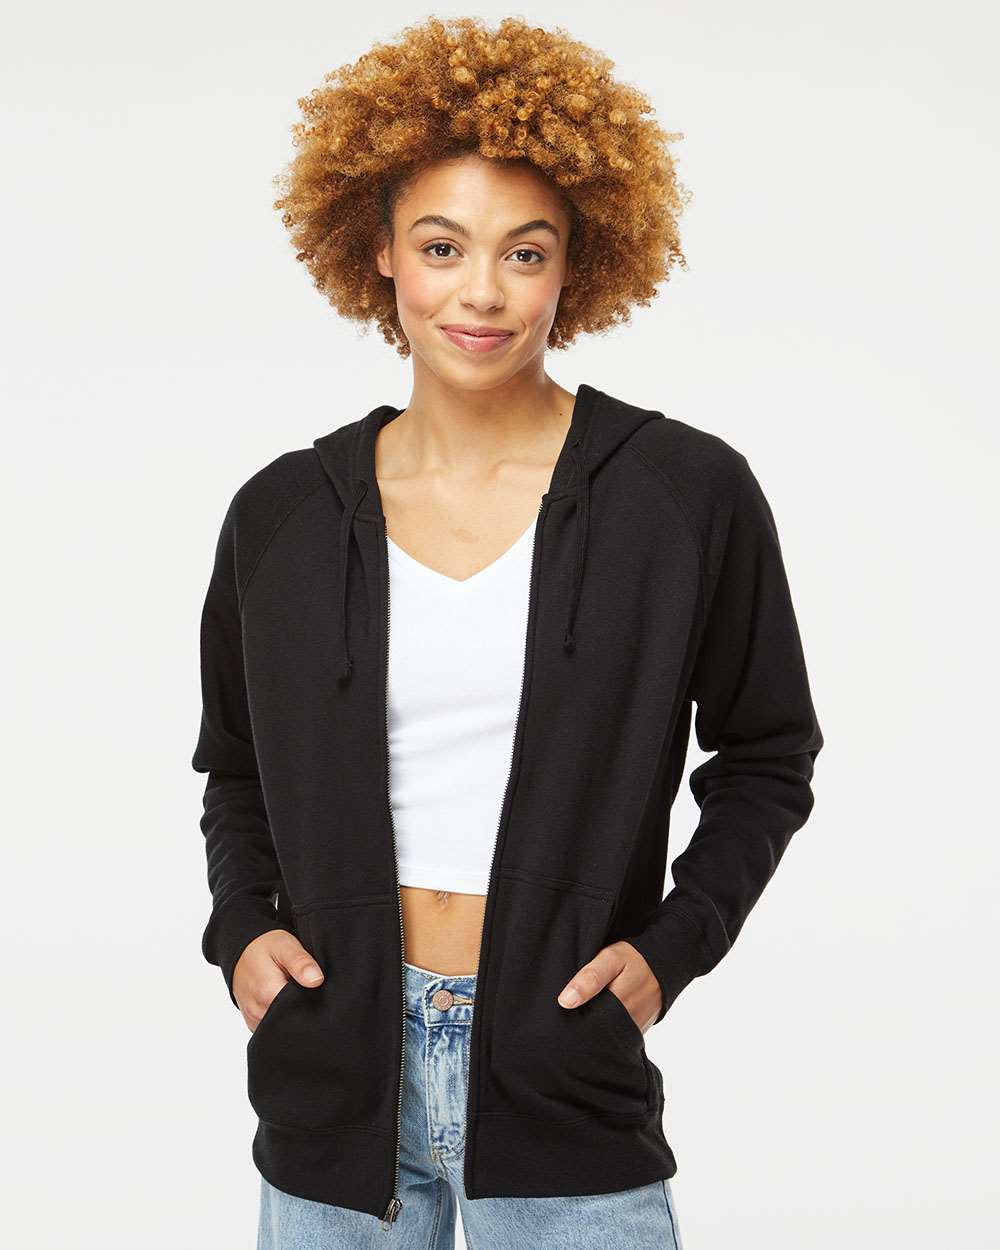 [NEW] Independent Trading Co. Unisex Special Blend Raglan Full-Zip Hooded Sweatshirt